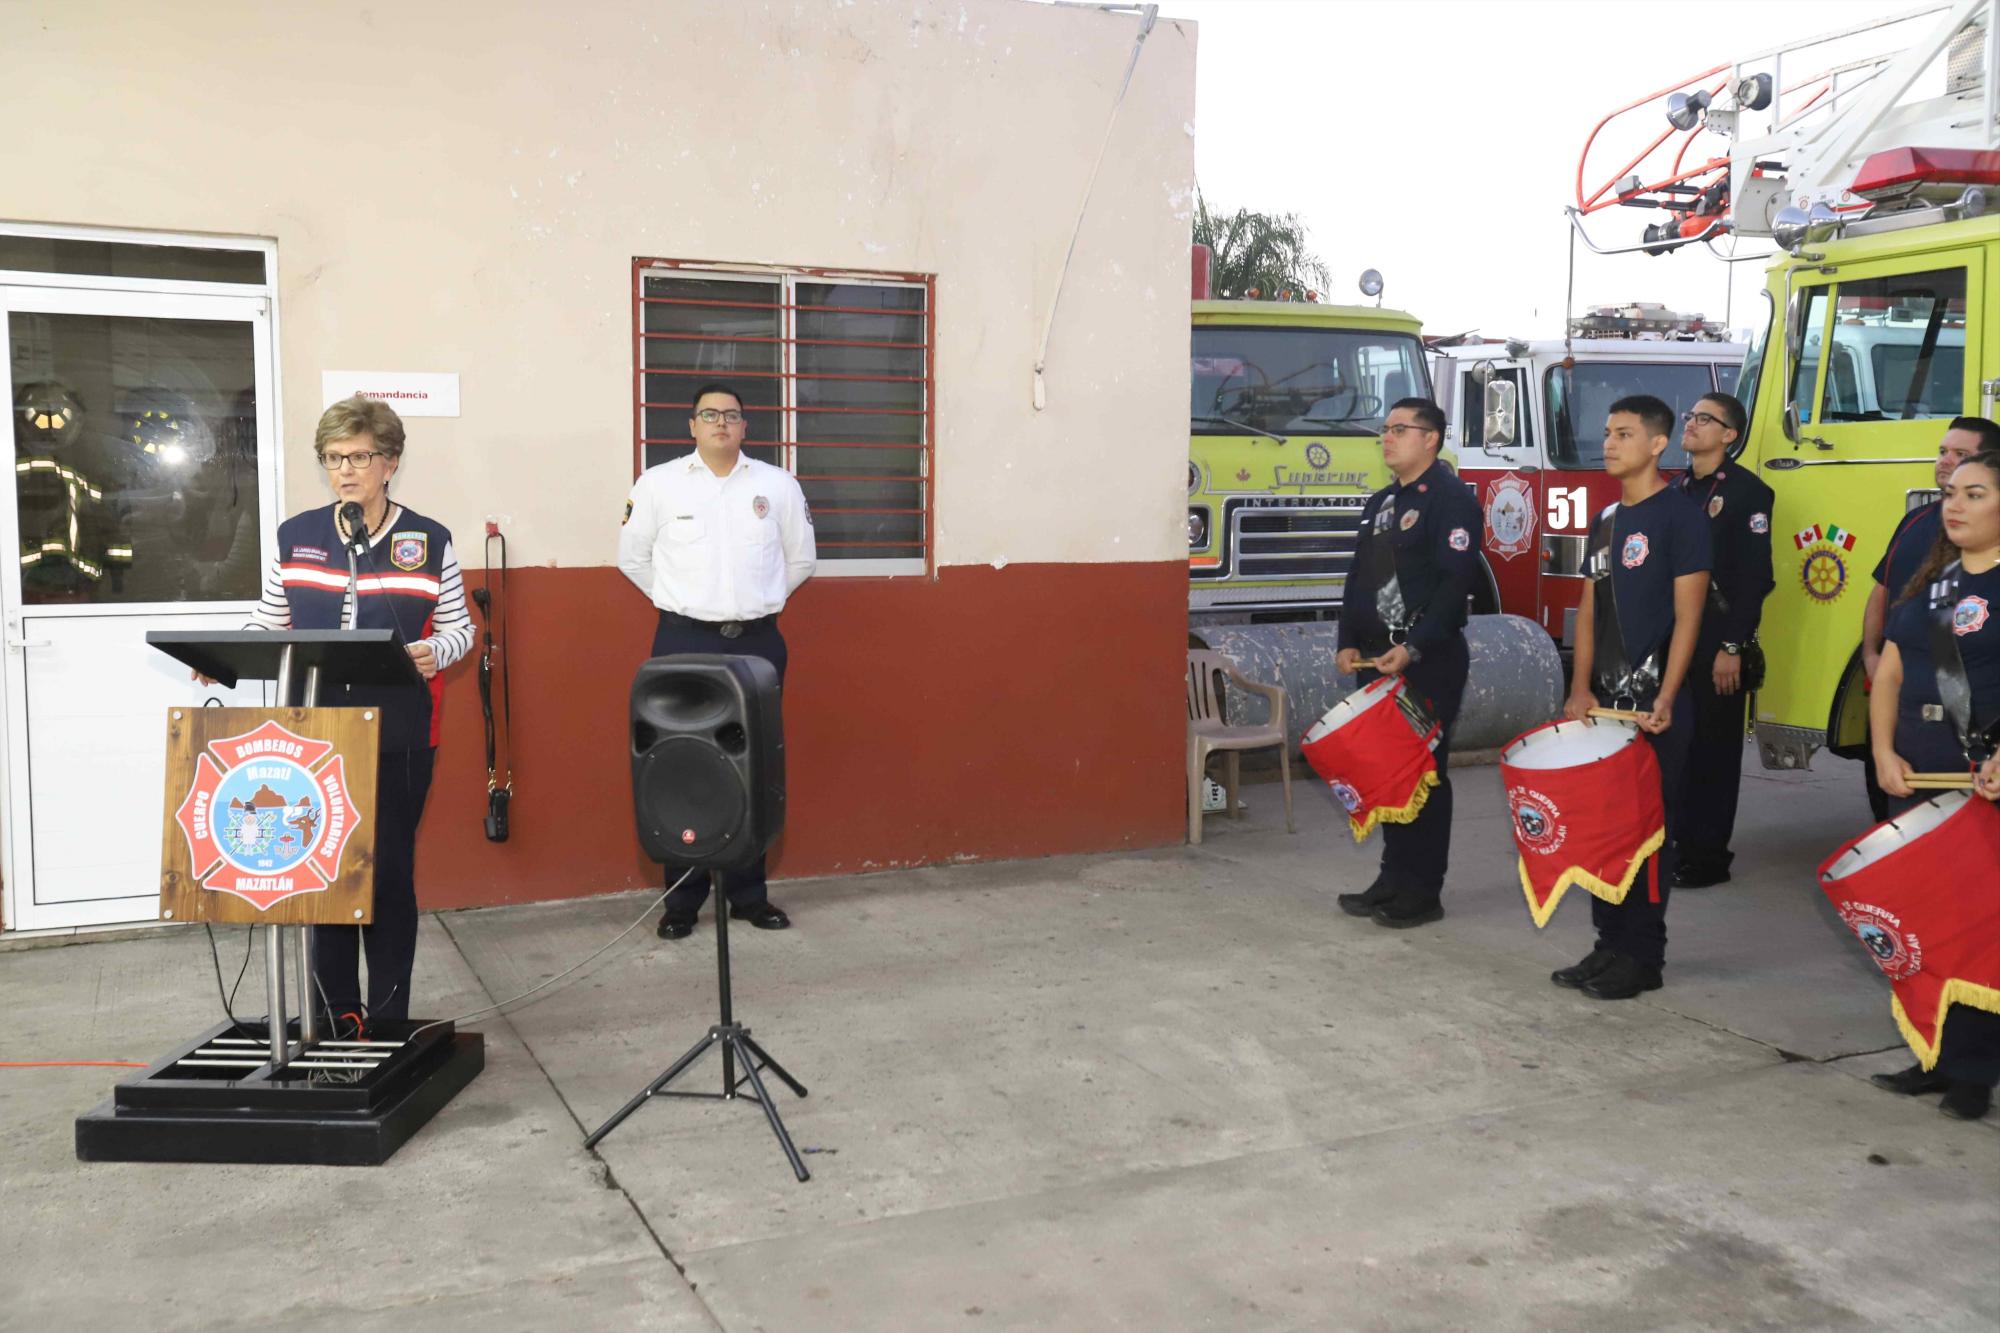 $!Lourdes Magallón Huerta, presidenta del Patronato de Bomberos Voluntarios de Mazatlán, expresó un mensaje a los presentes.